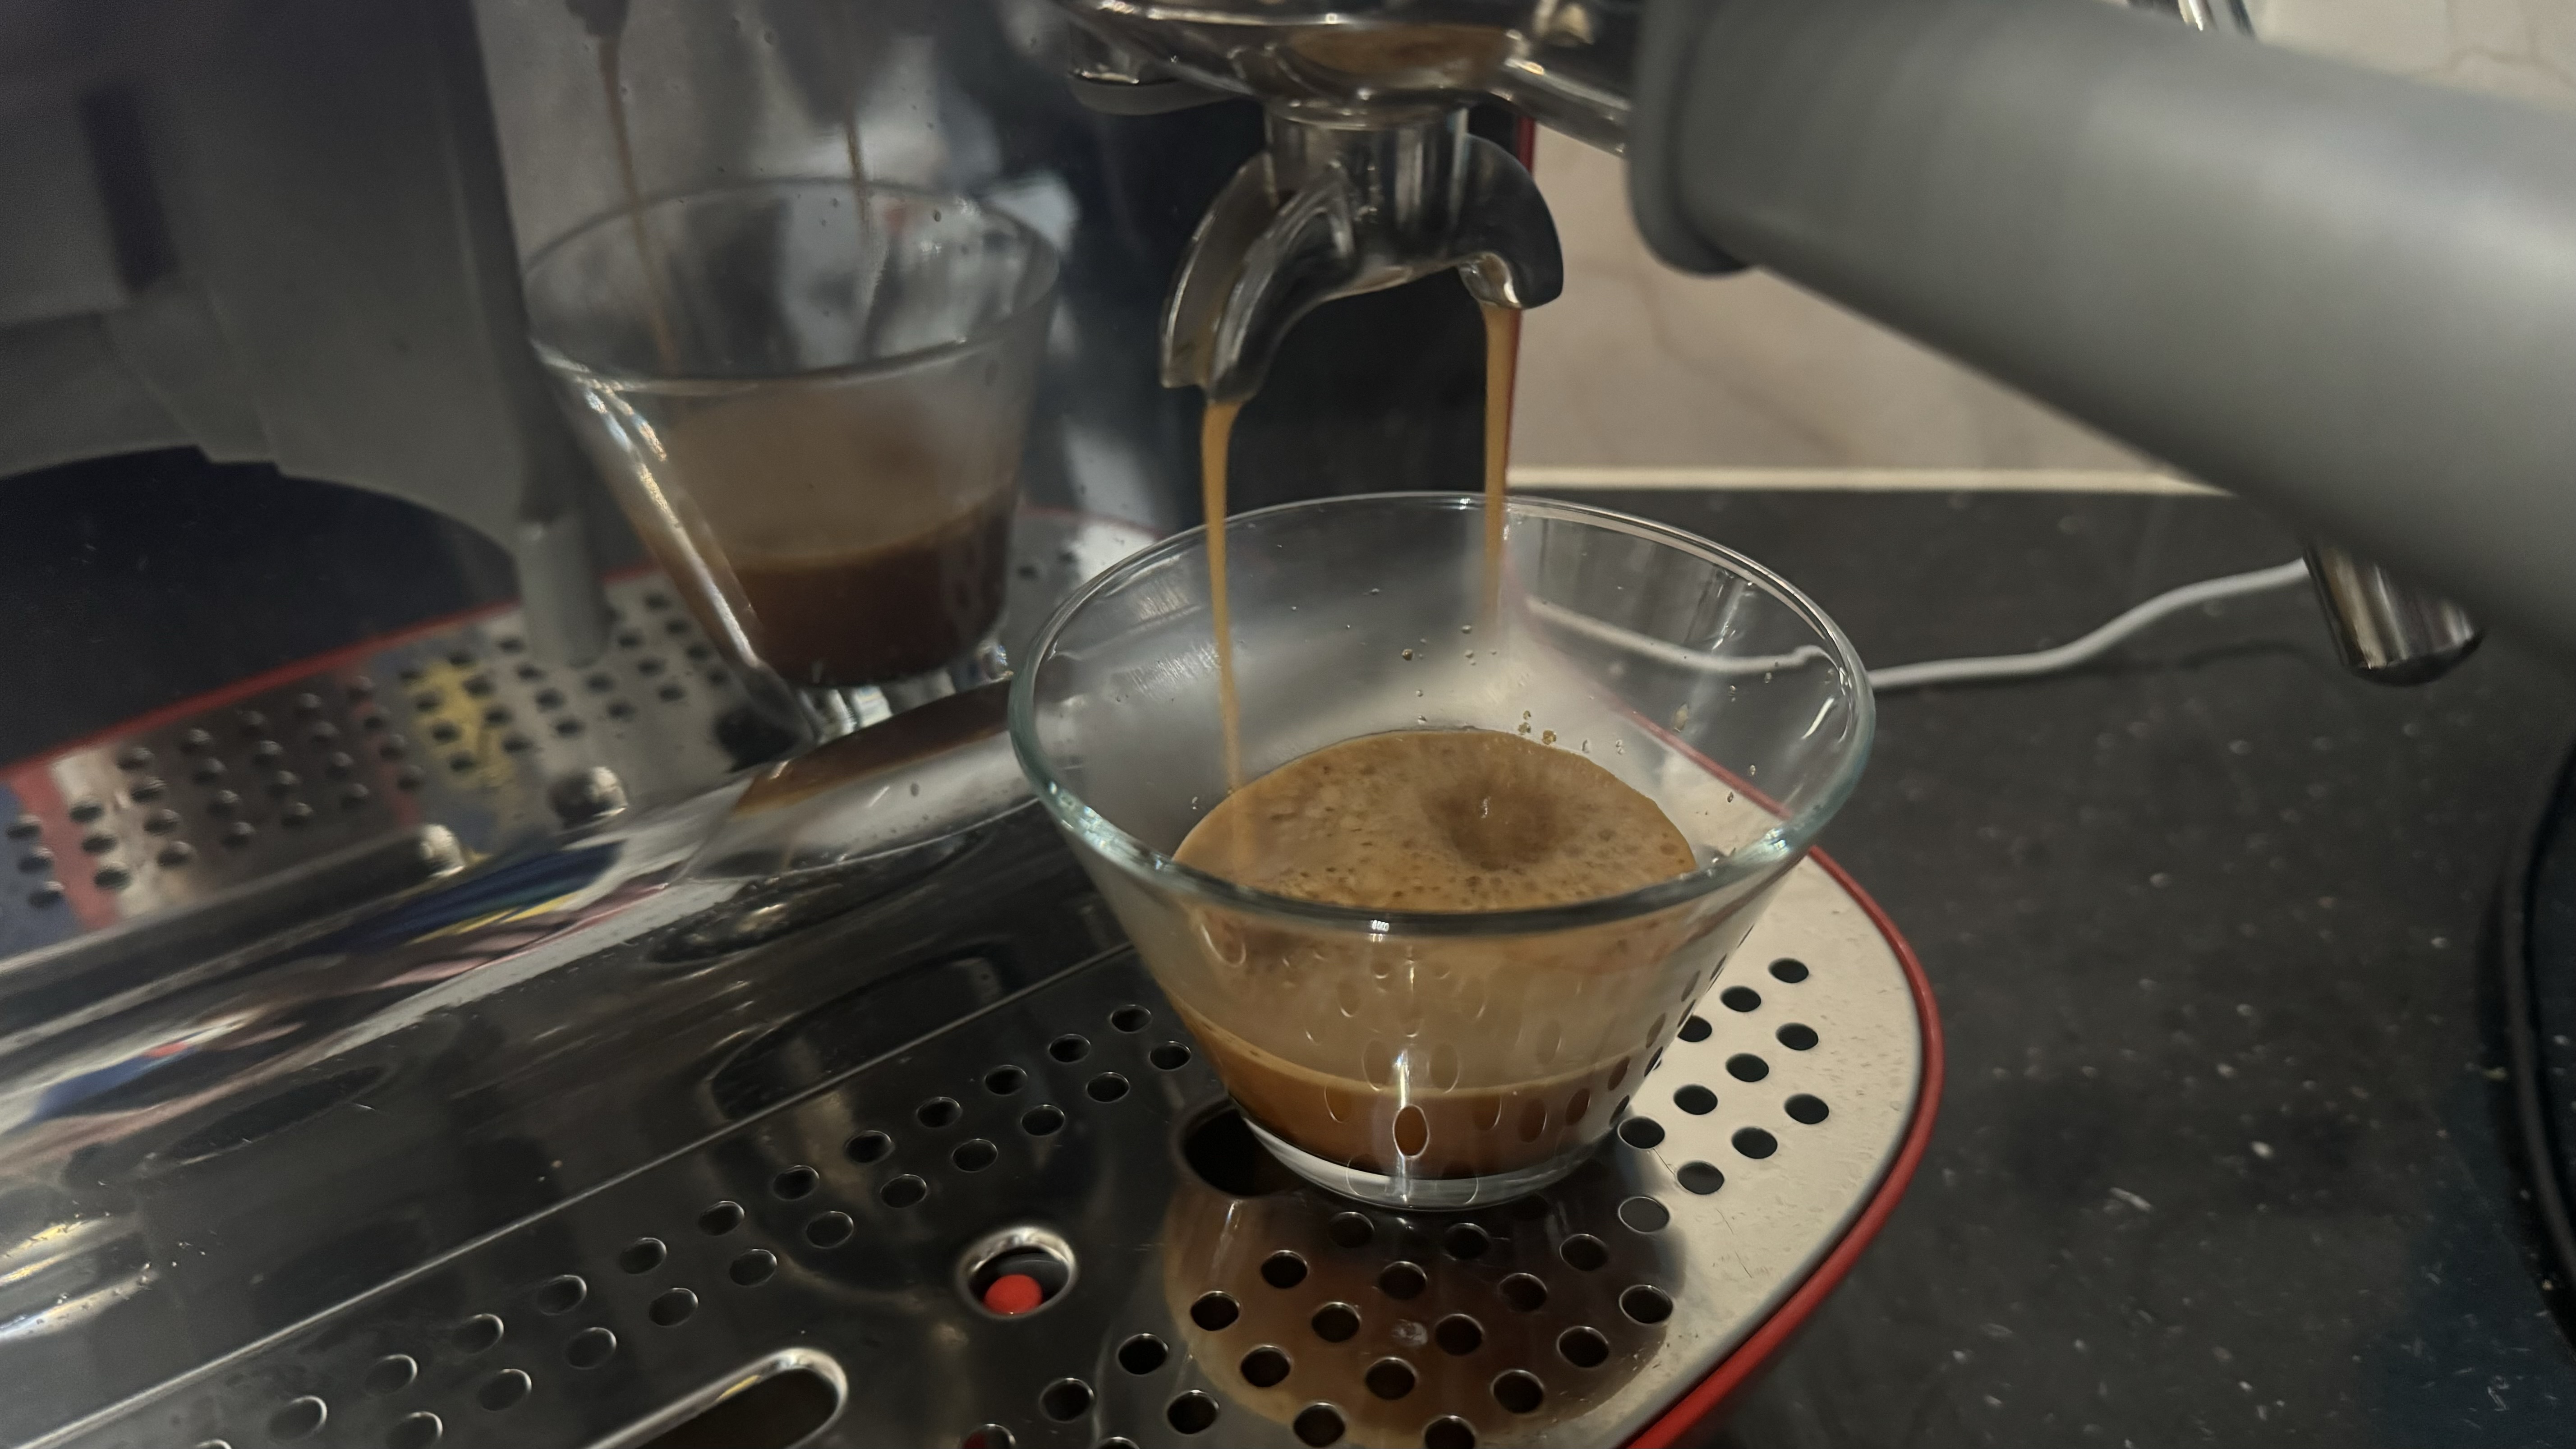 Smeg Espresso Coffee Machine EGF03 making an espresso shot